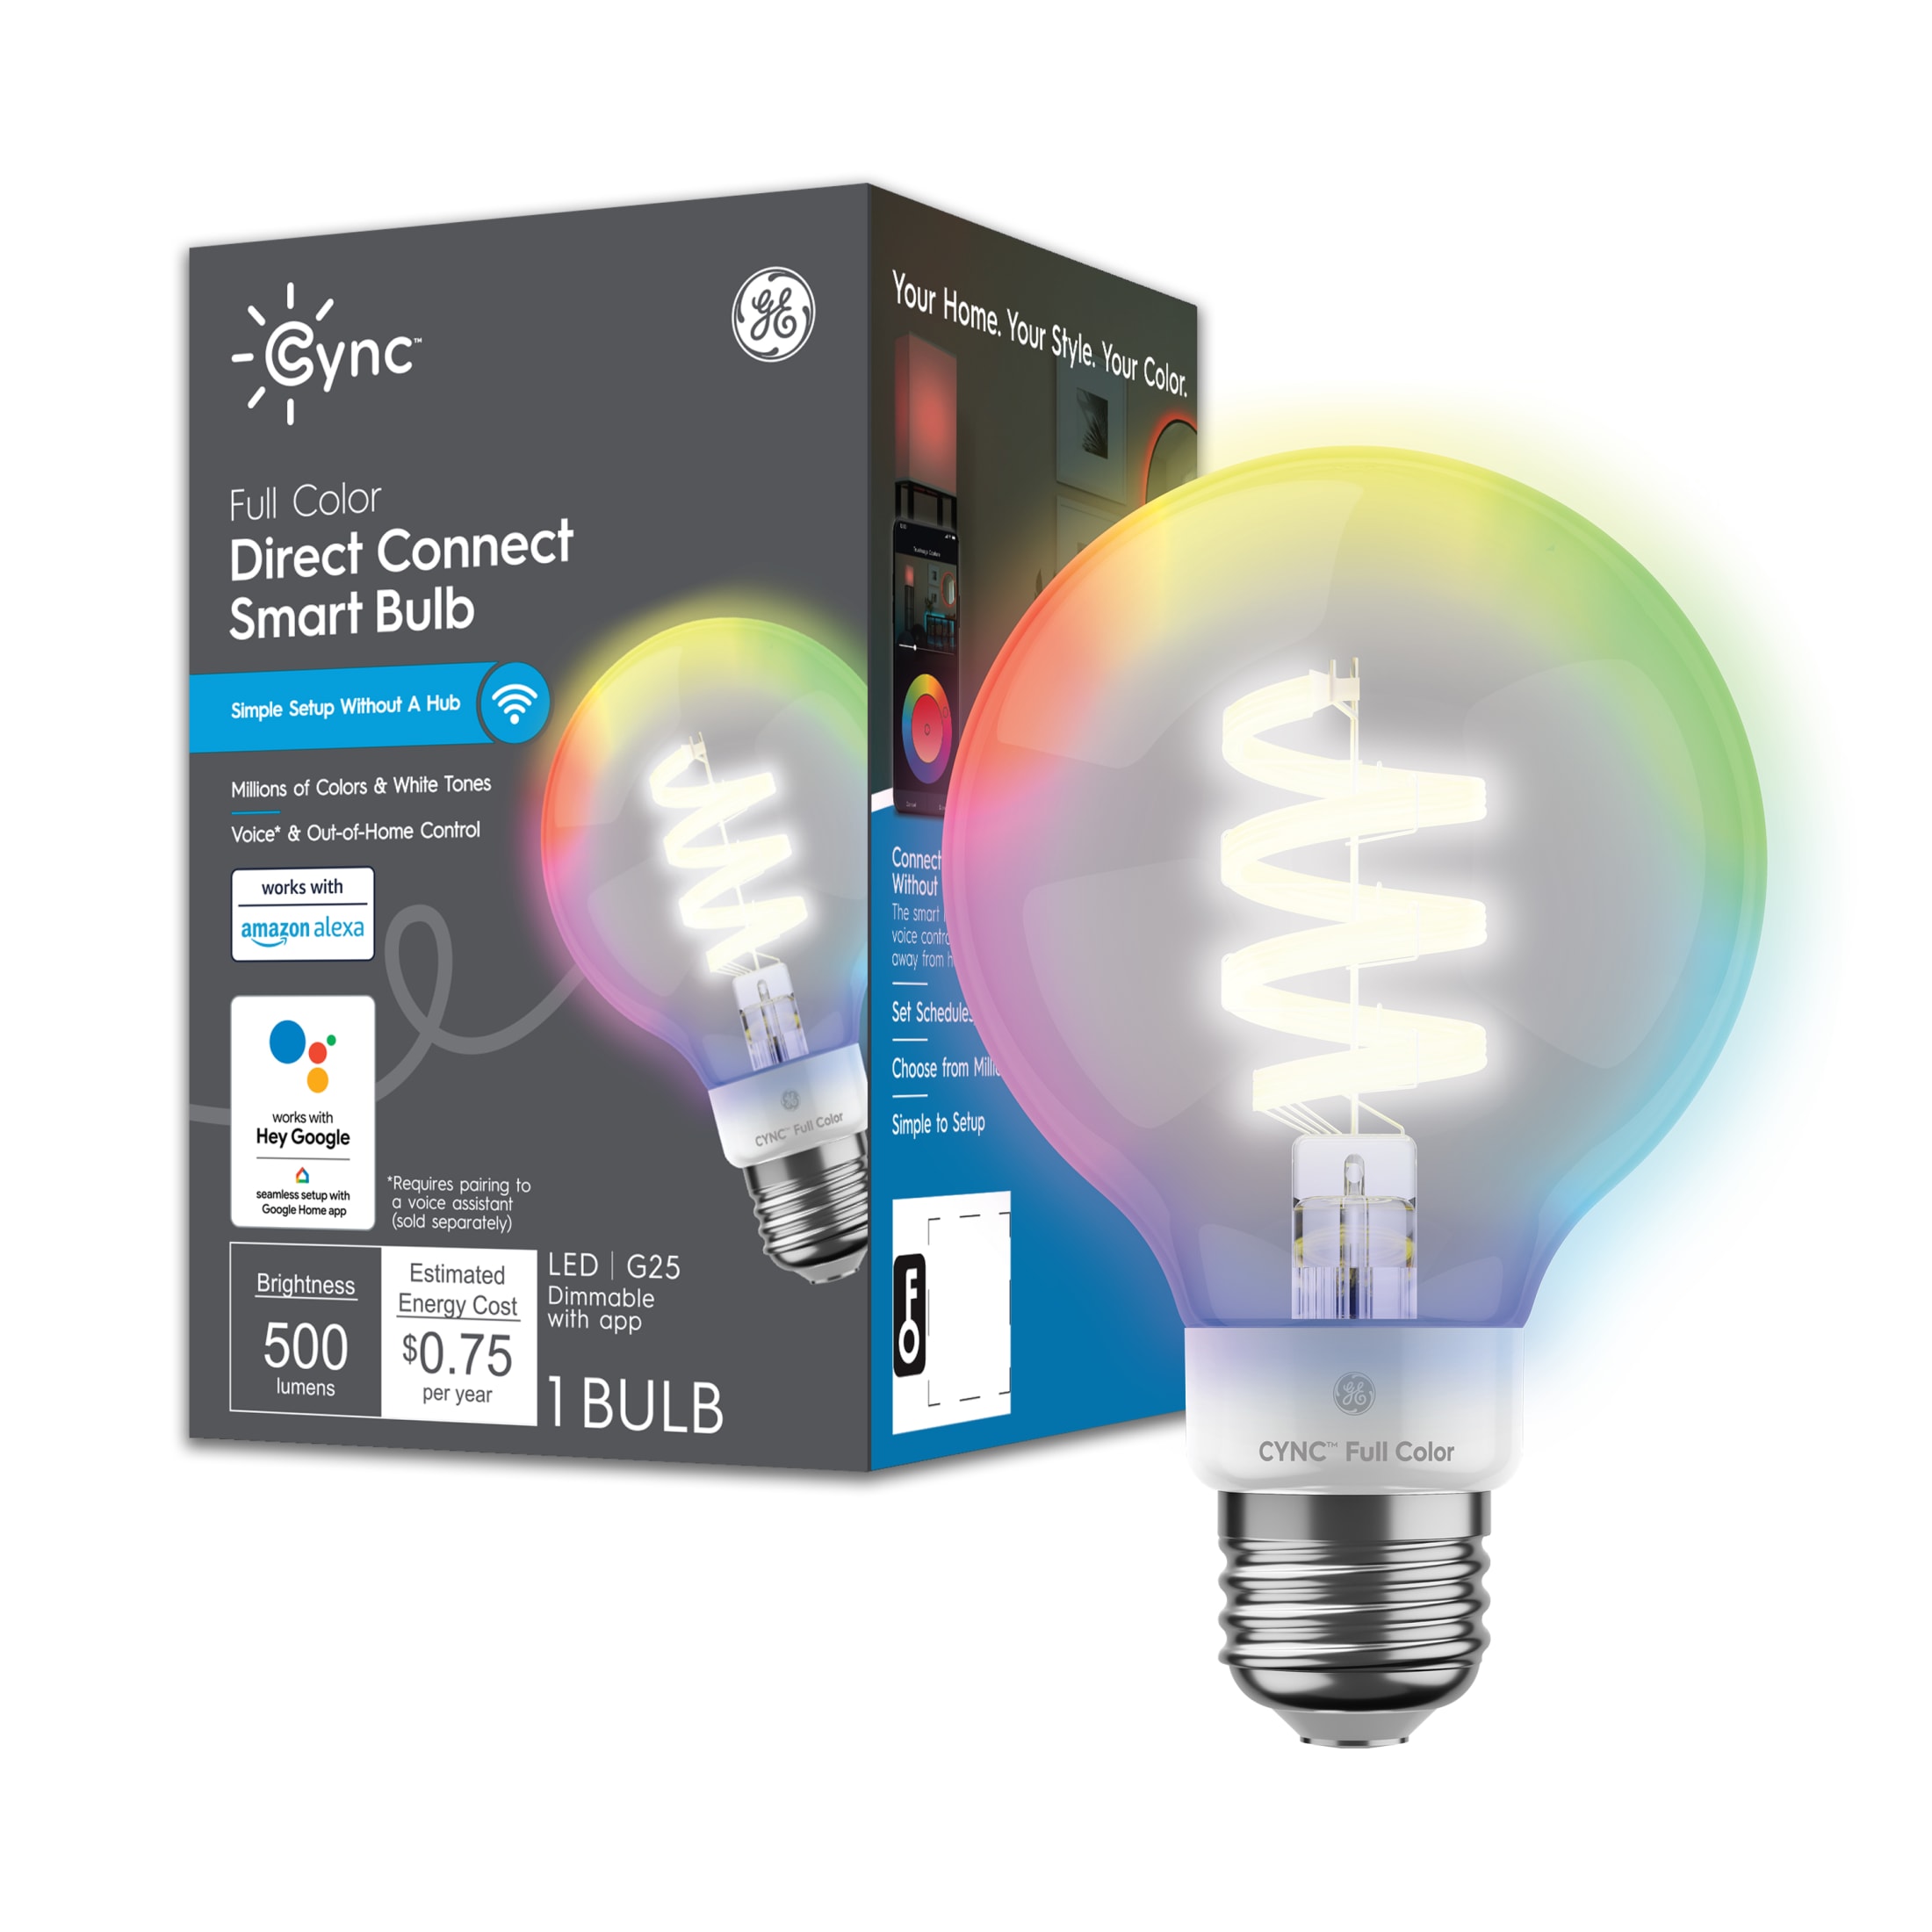 Ge Cync G25 Smart LED Light Bulb, Color Changing WiFi Lights, 60 Watts, Medium Base, 1pk, Size: 1 Pack